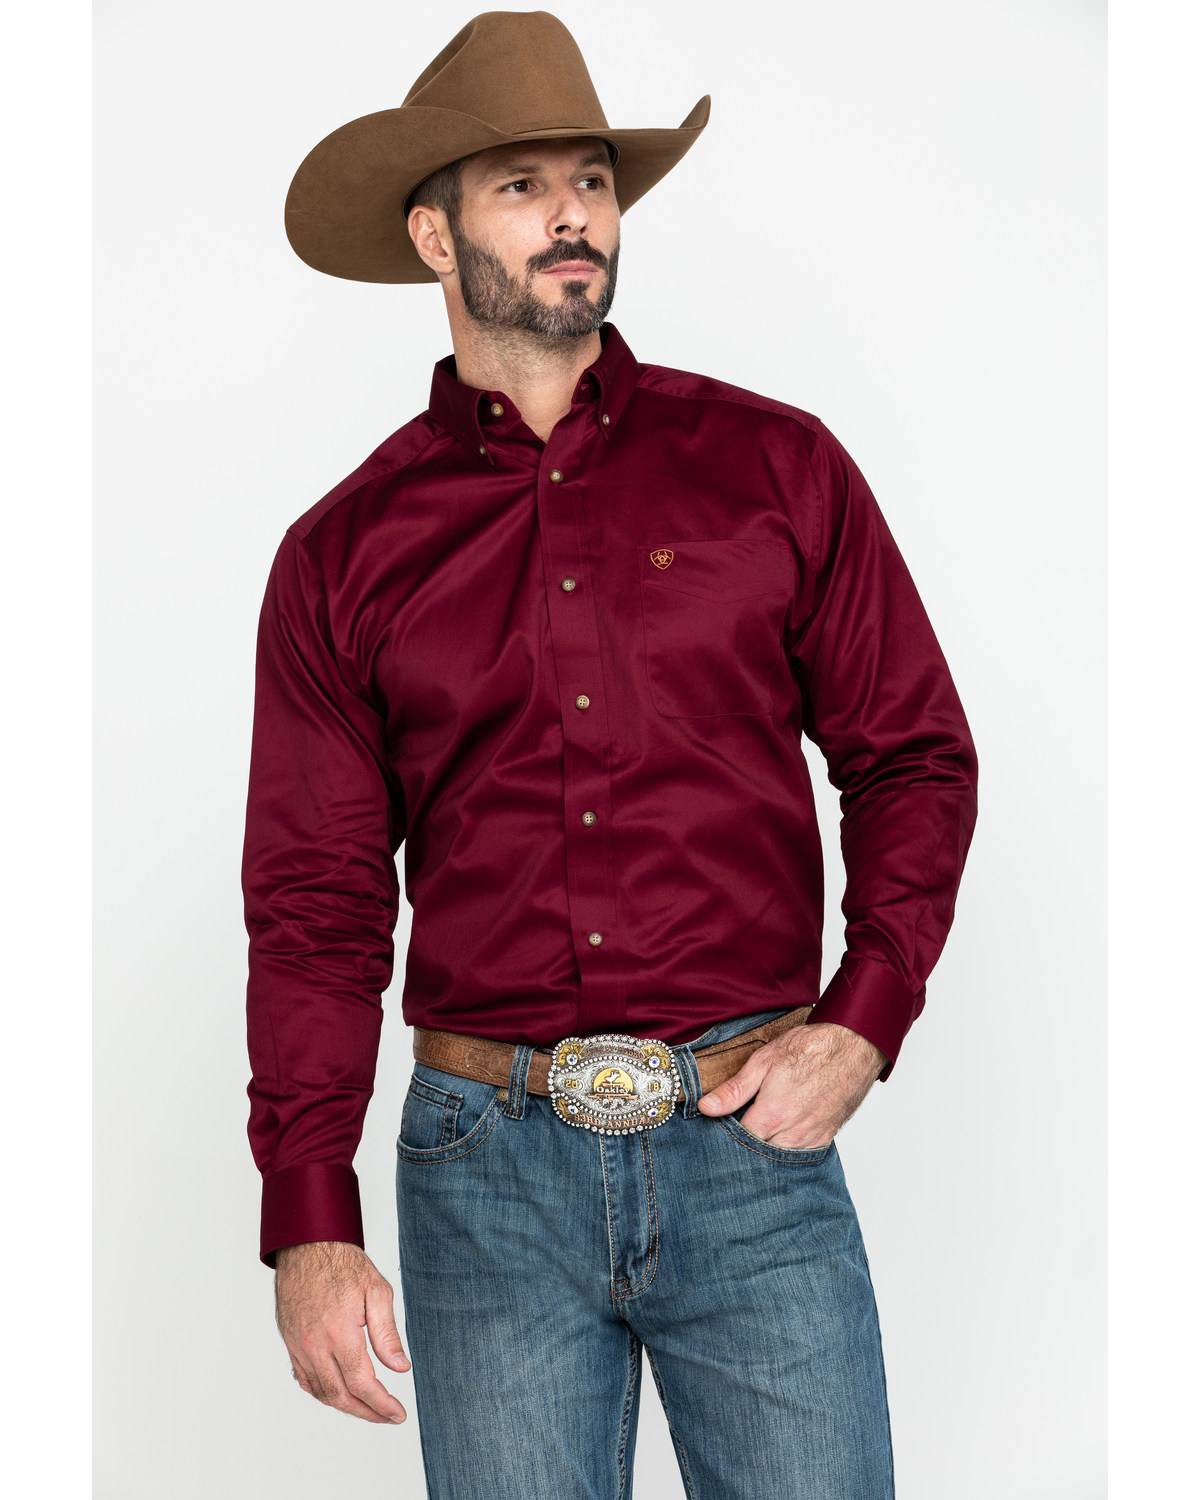 Ariat Men's Burgundy Solid Twill Long Sleeve Western Shirt - Big & Tall